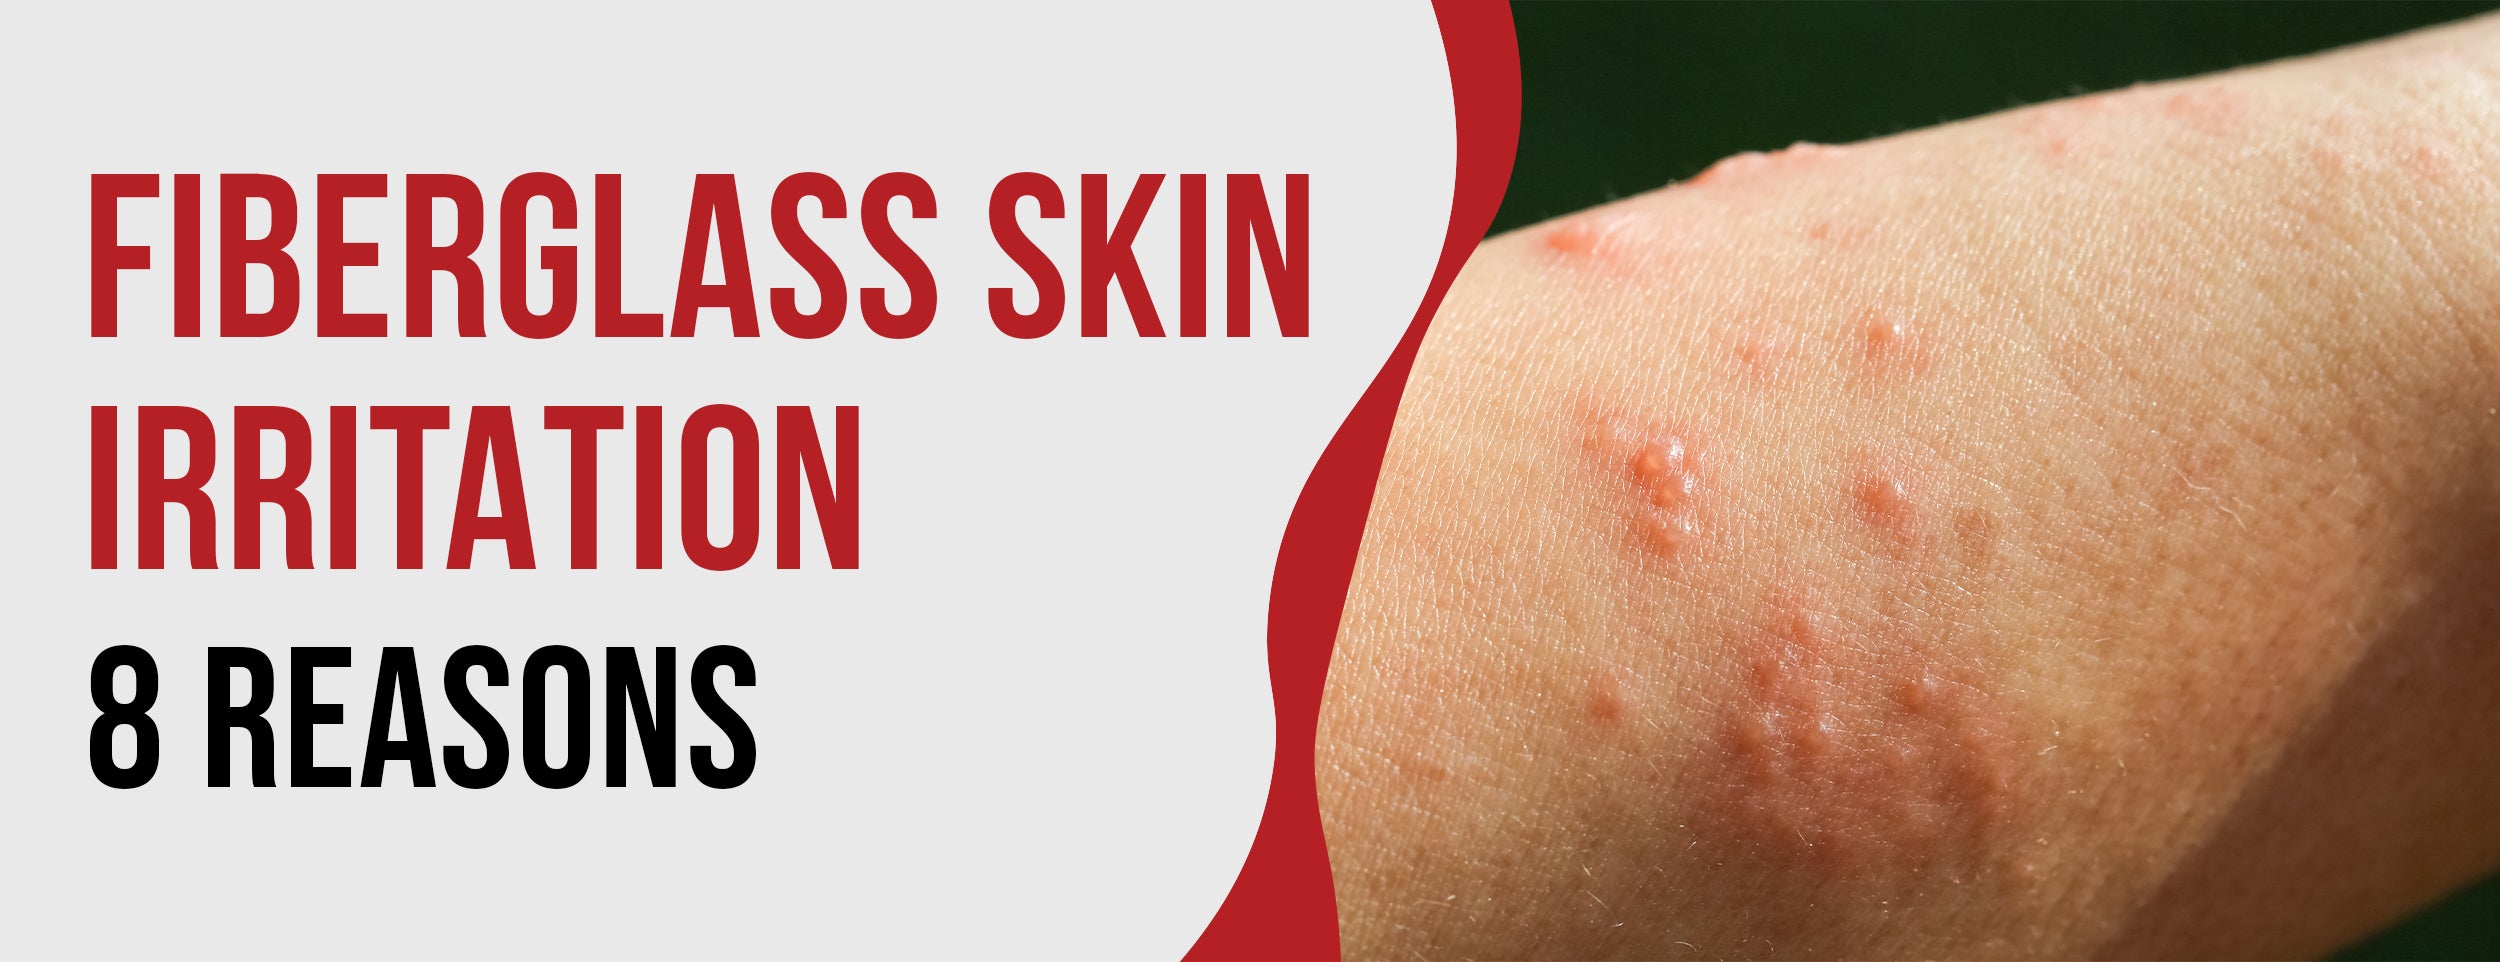 Irritation of the skin caused by fiberglass